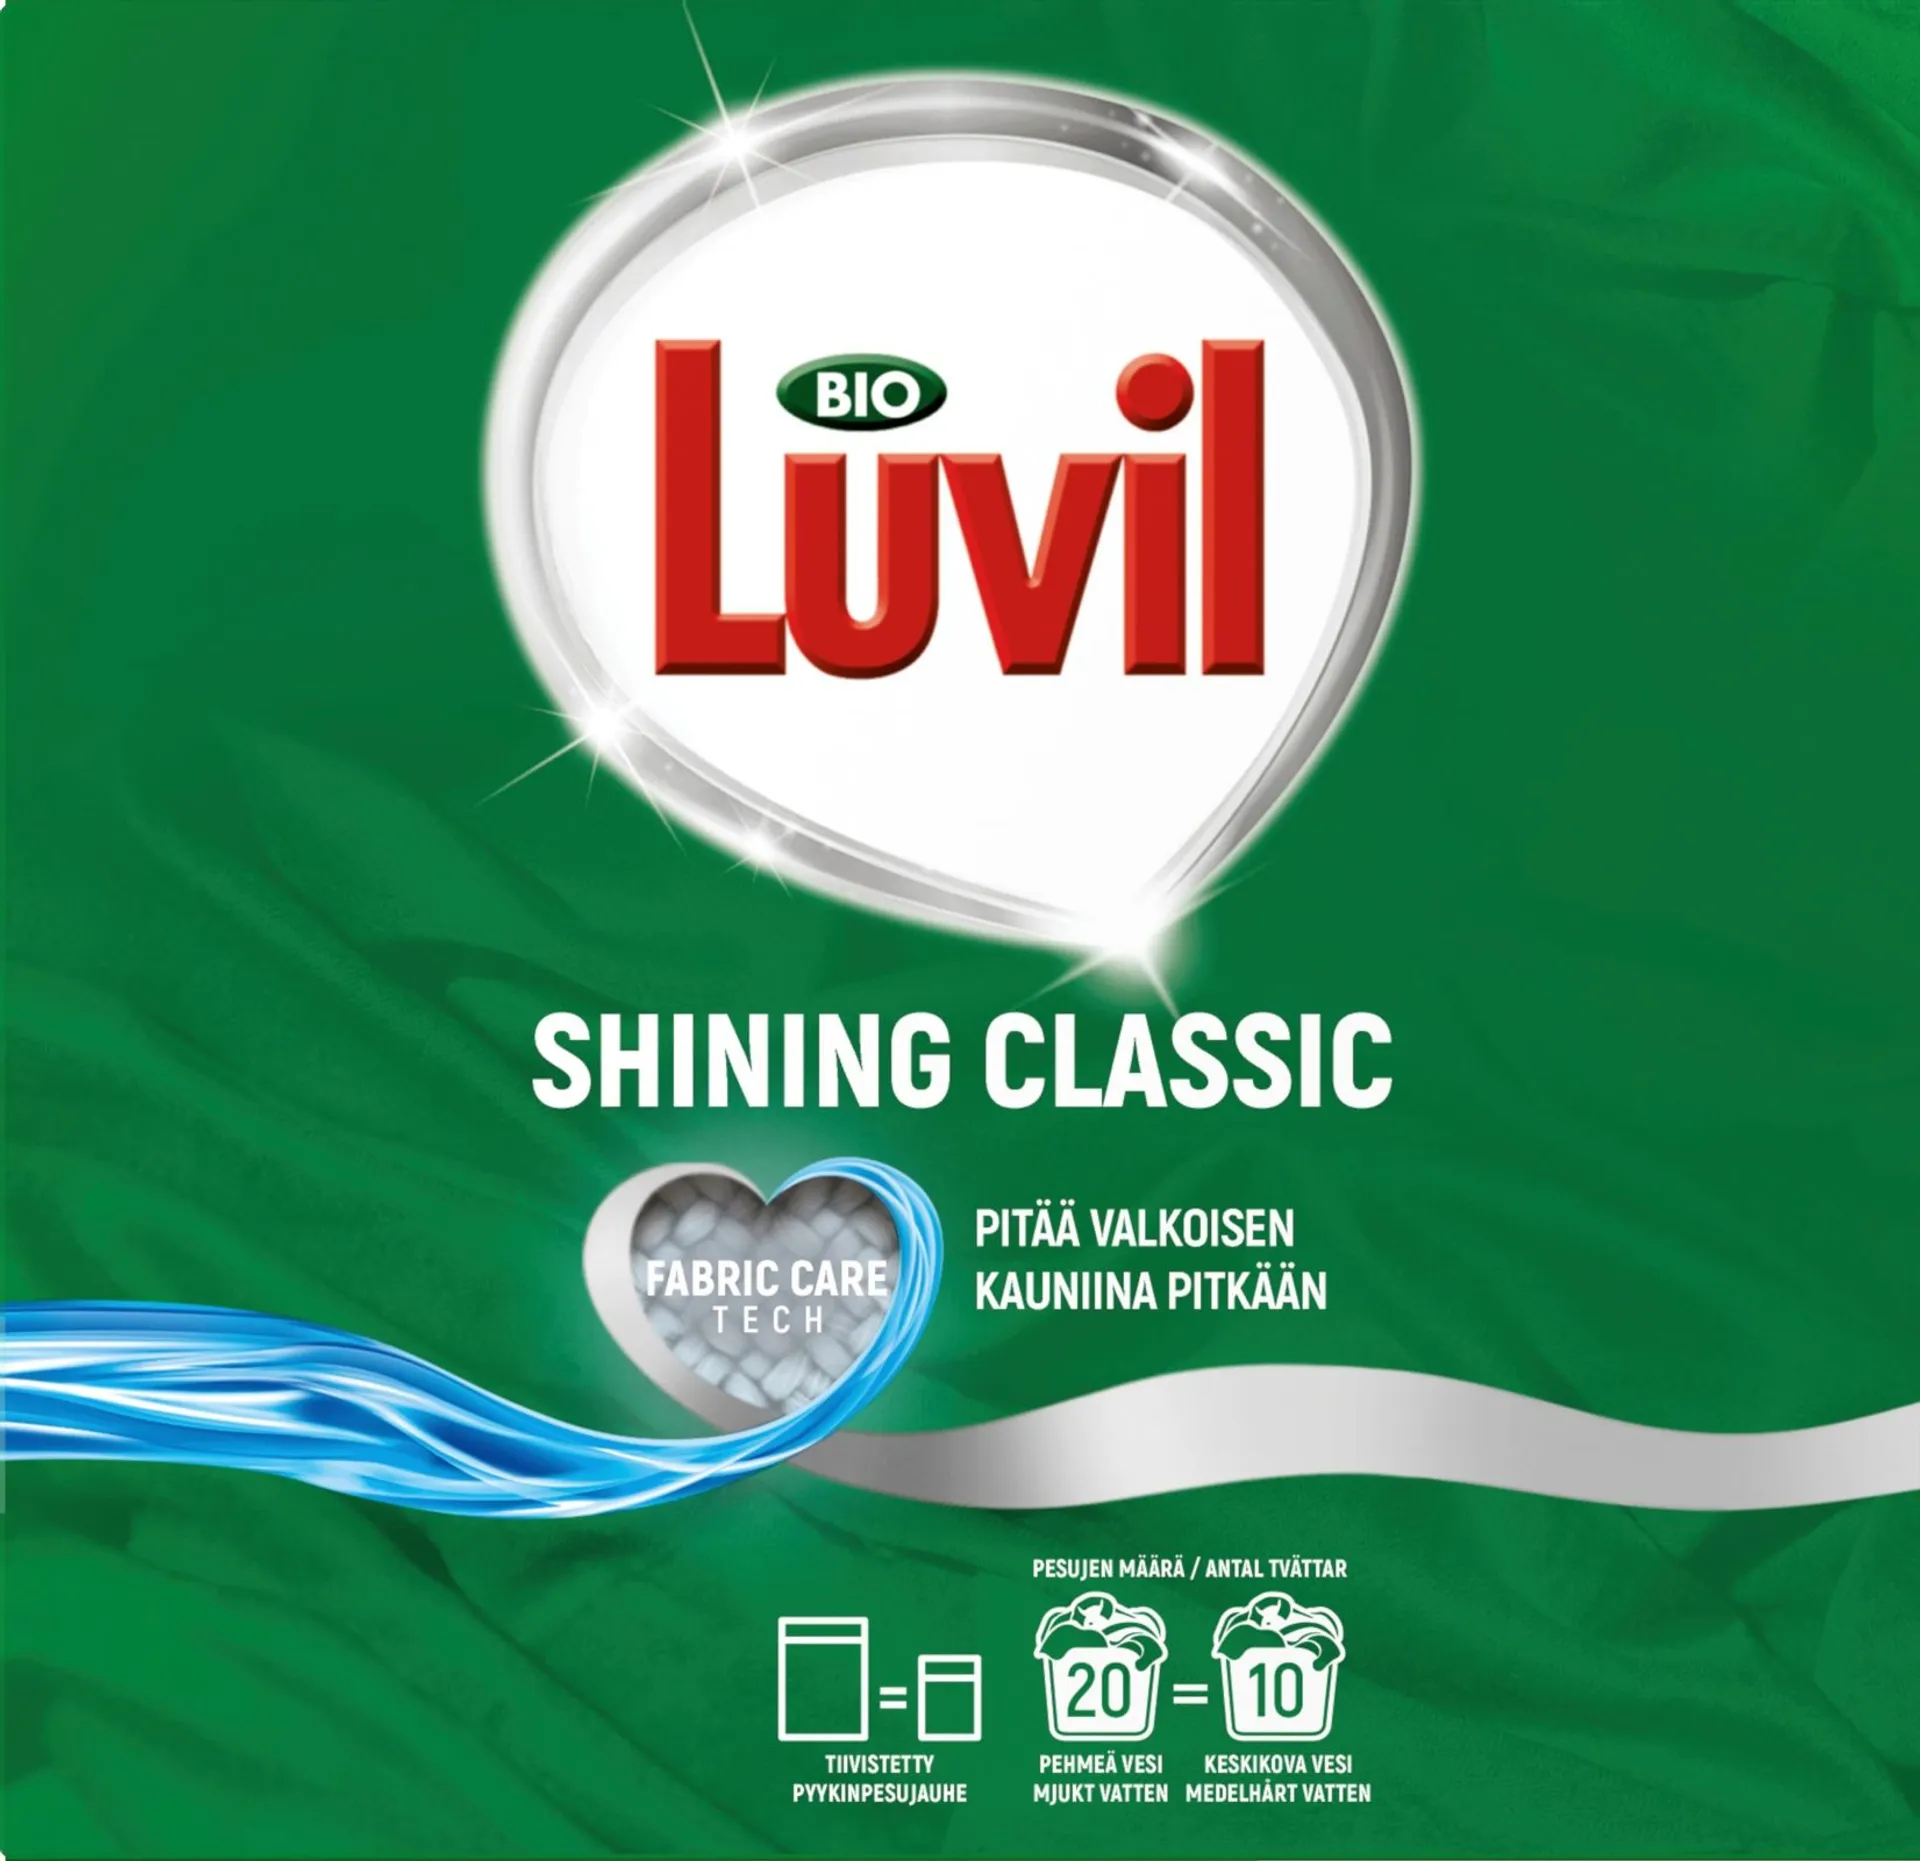 Bio Luvil Classic Pyykinpesujauhe 750 g - 1